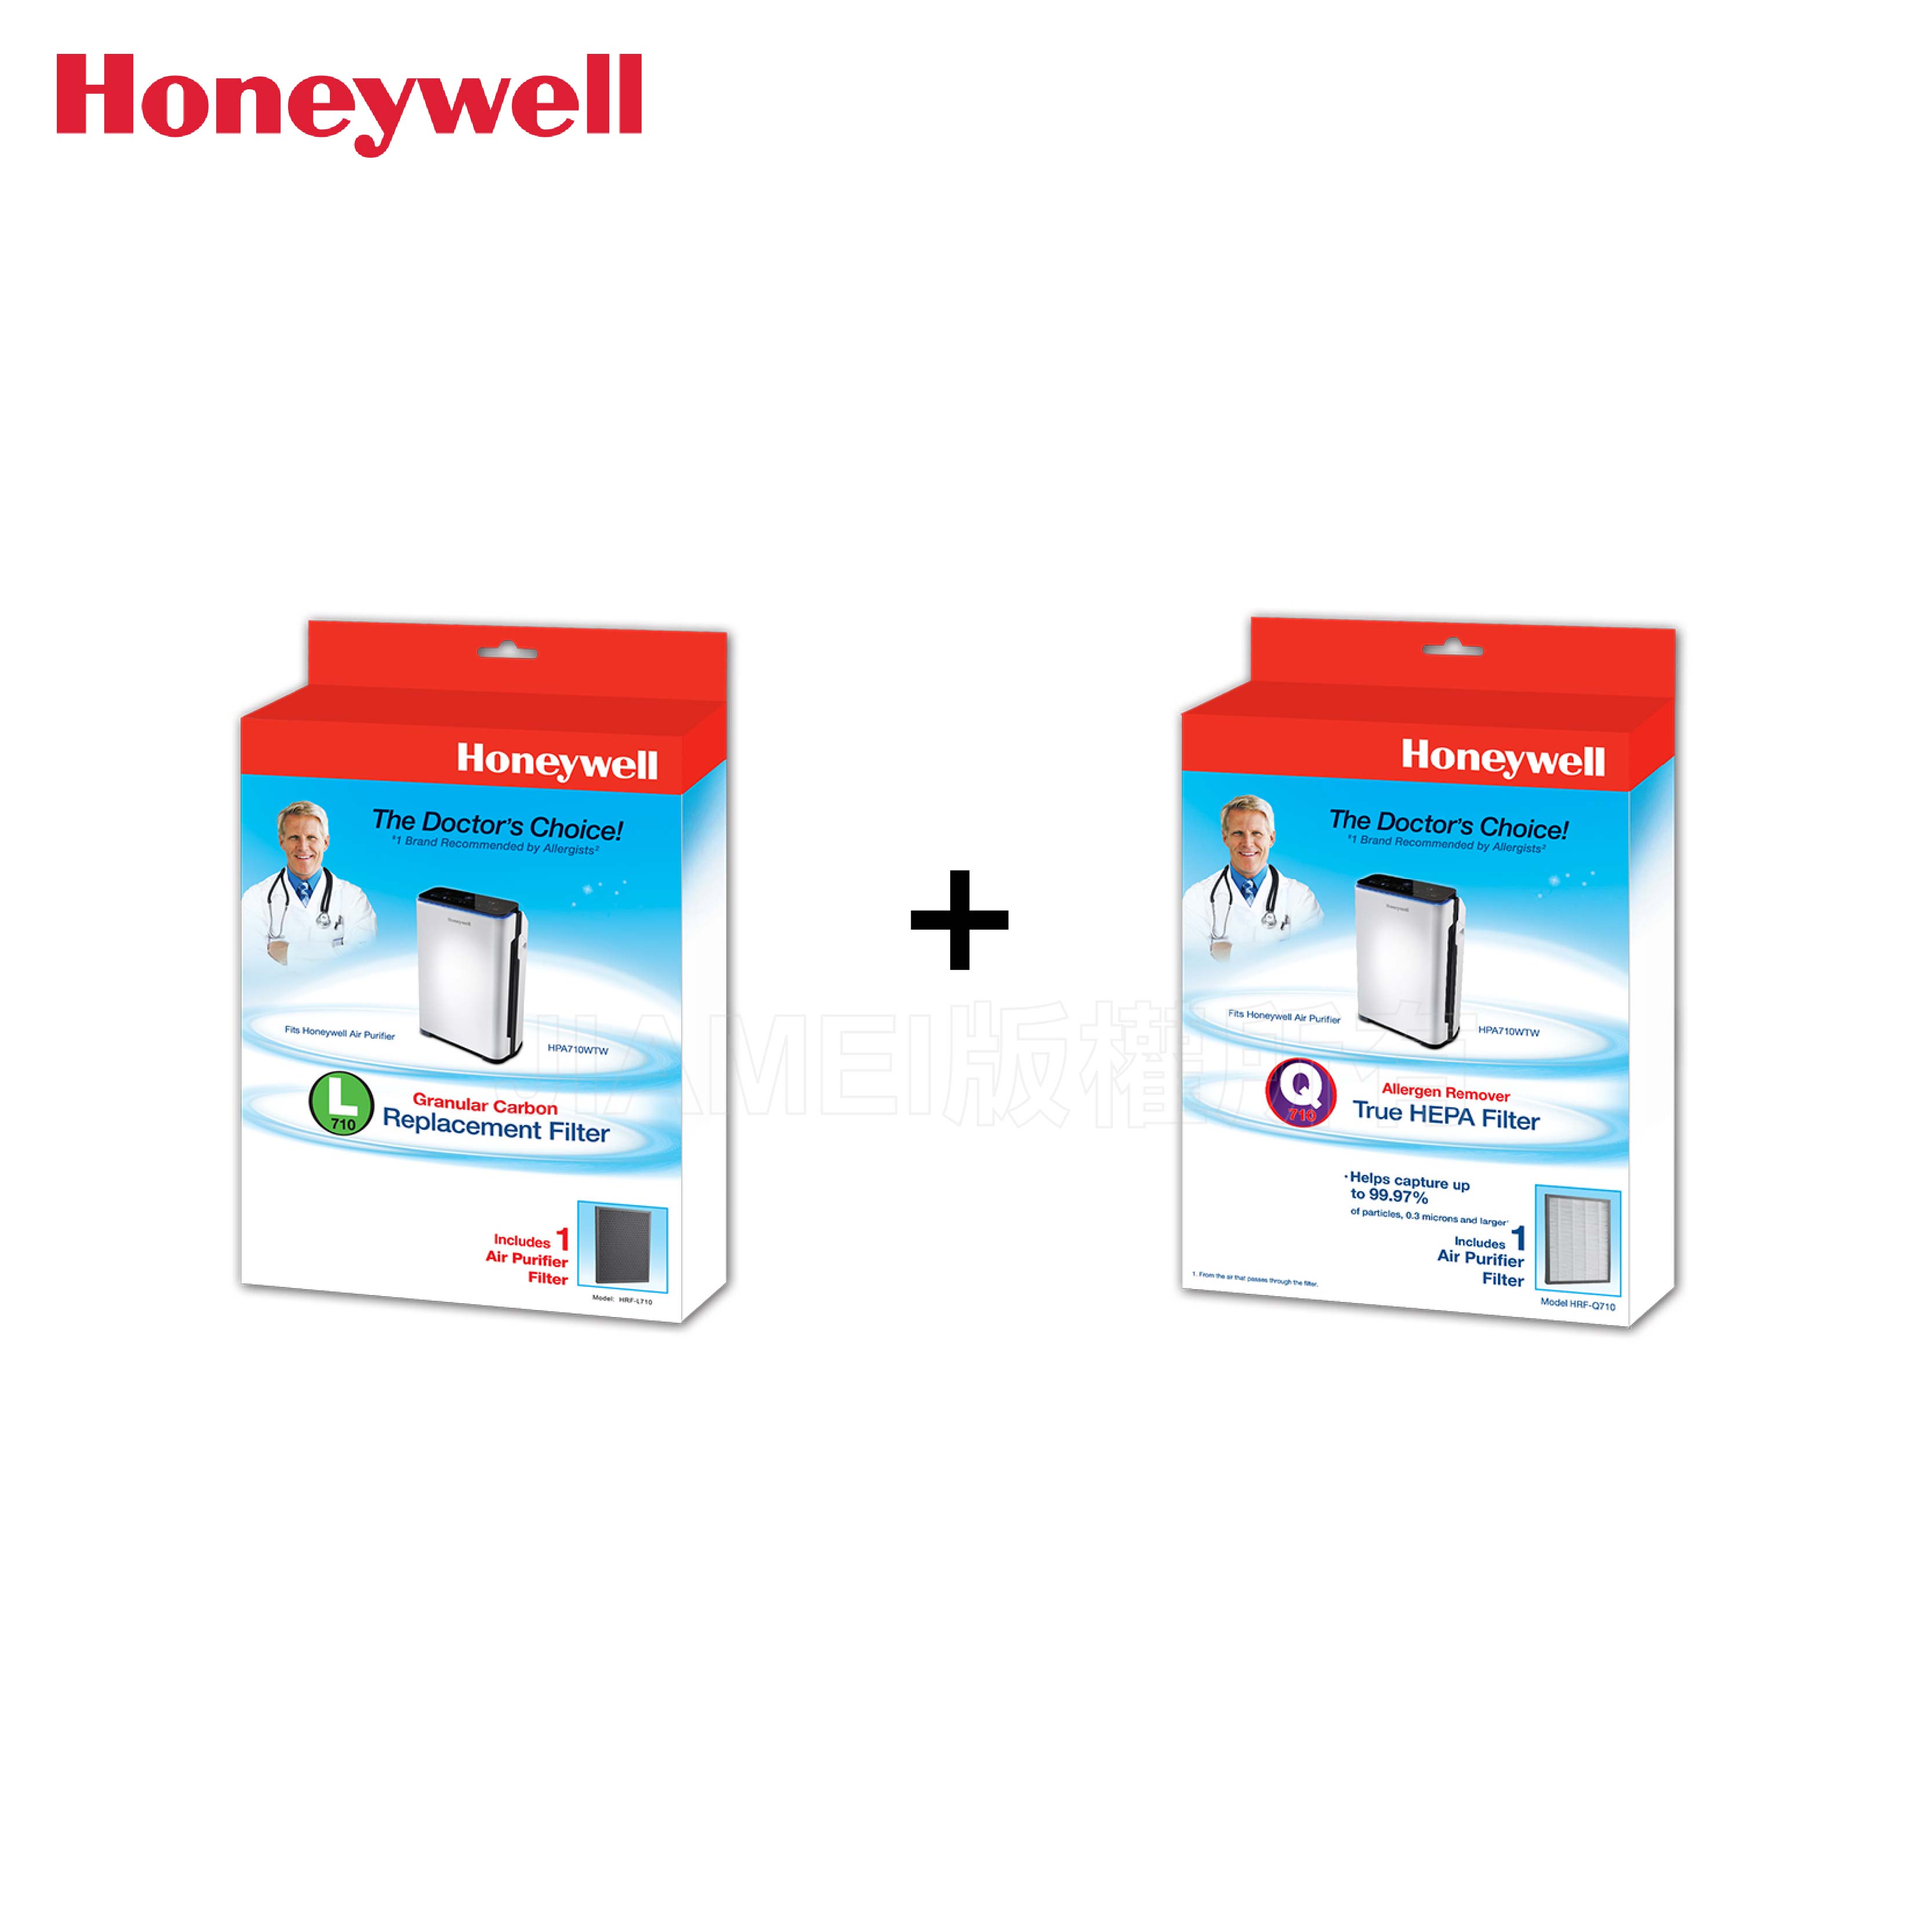 ◤A級福利品‧數量有限◢【Honeywell】True HEPA濾網 HRF-Q710+顆粒狀活性碳濾 HRF-L710